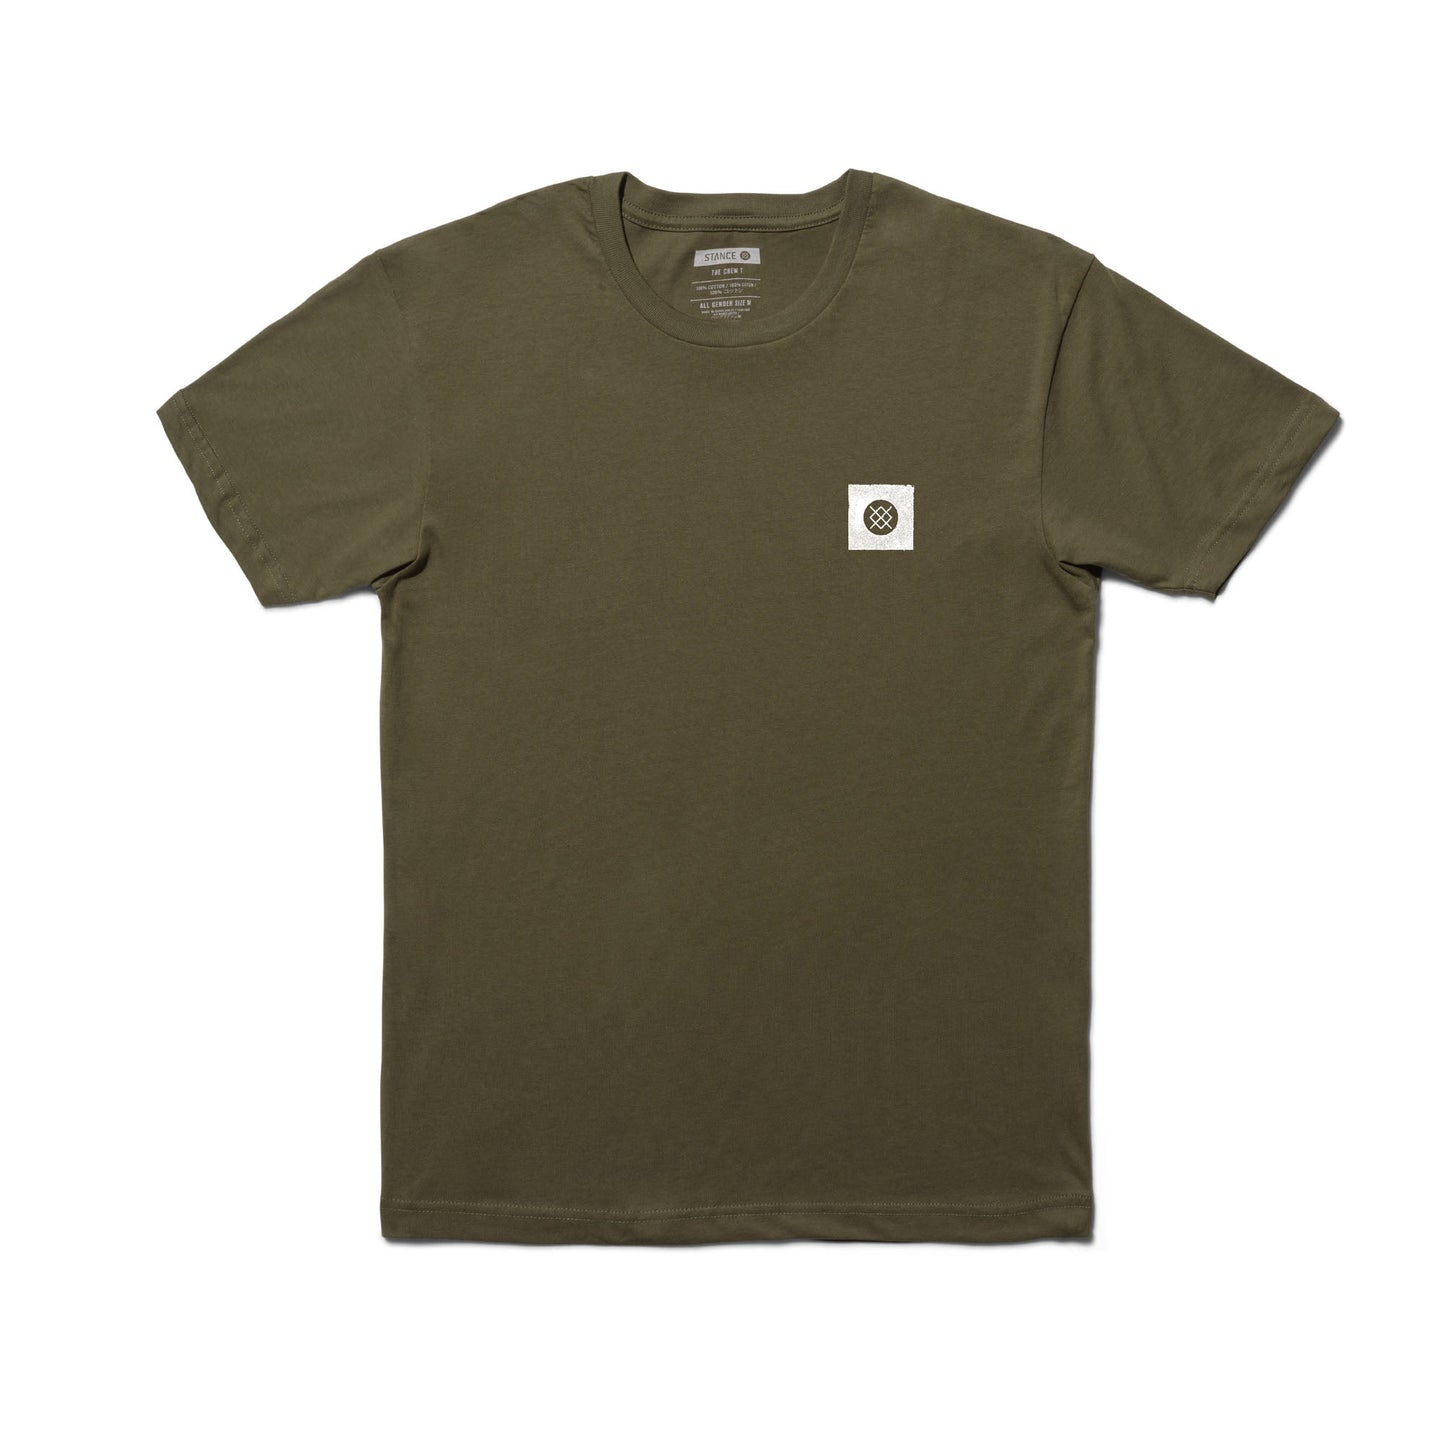 Stance Stance T-Shirt Militärgrün